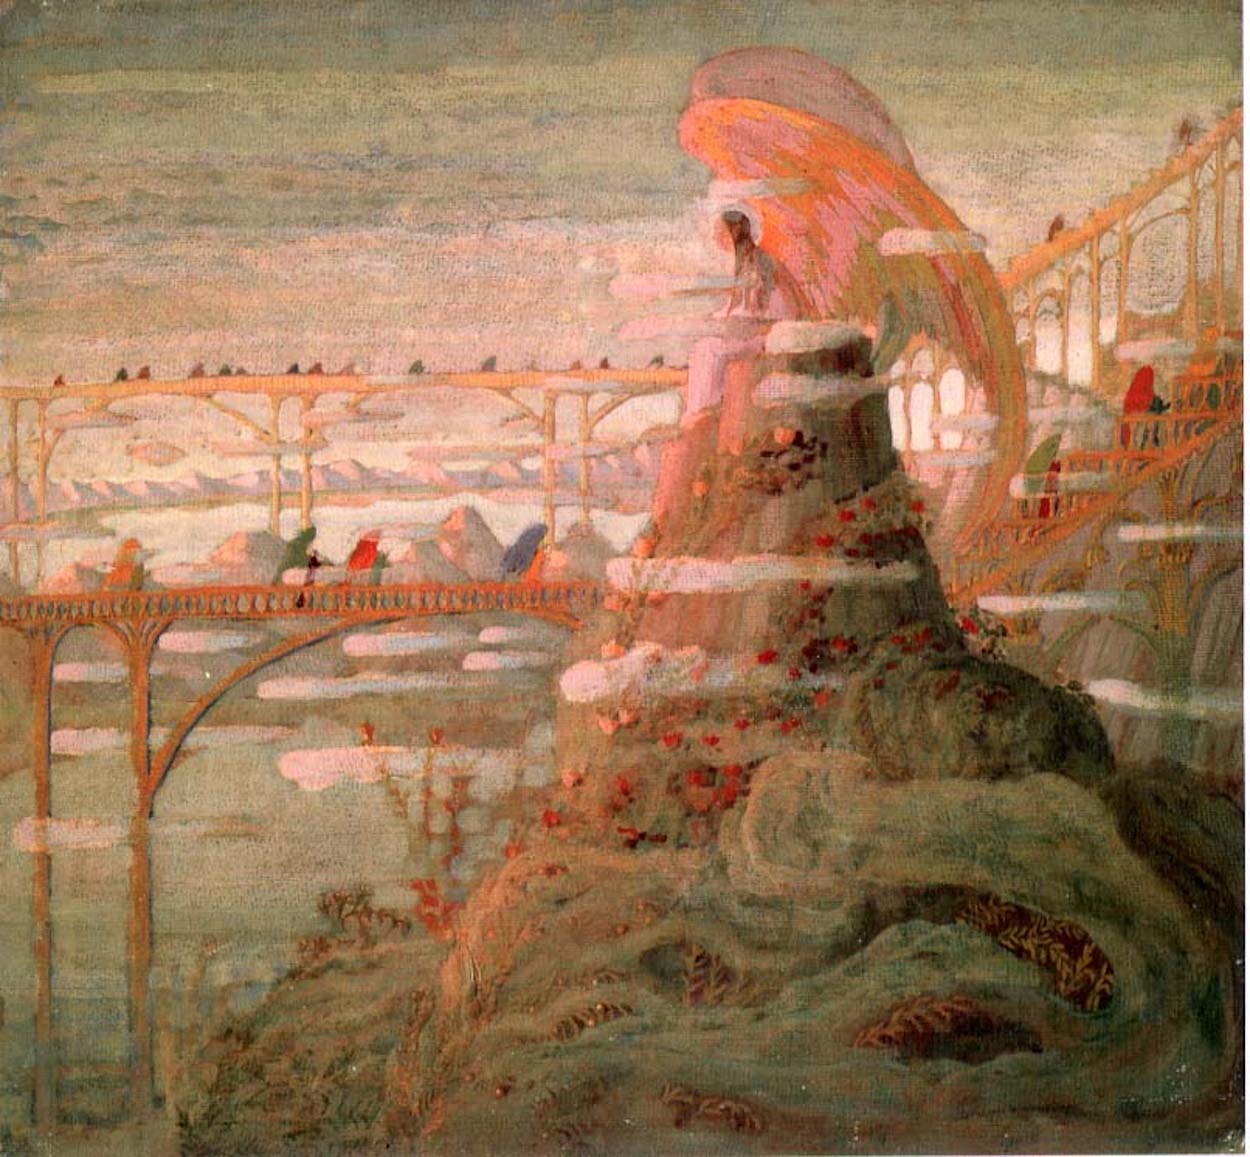 Înger (Preludiul îngerilor) by Mikalojus Konstantinas Čiurlionis - 1909 - 50 x 53,7 cm 